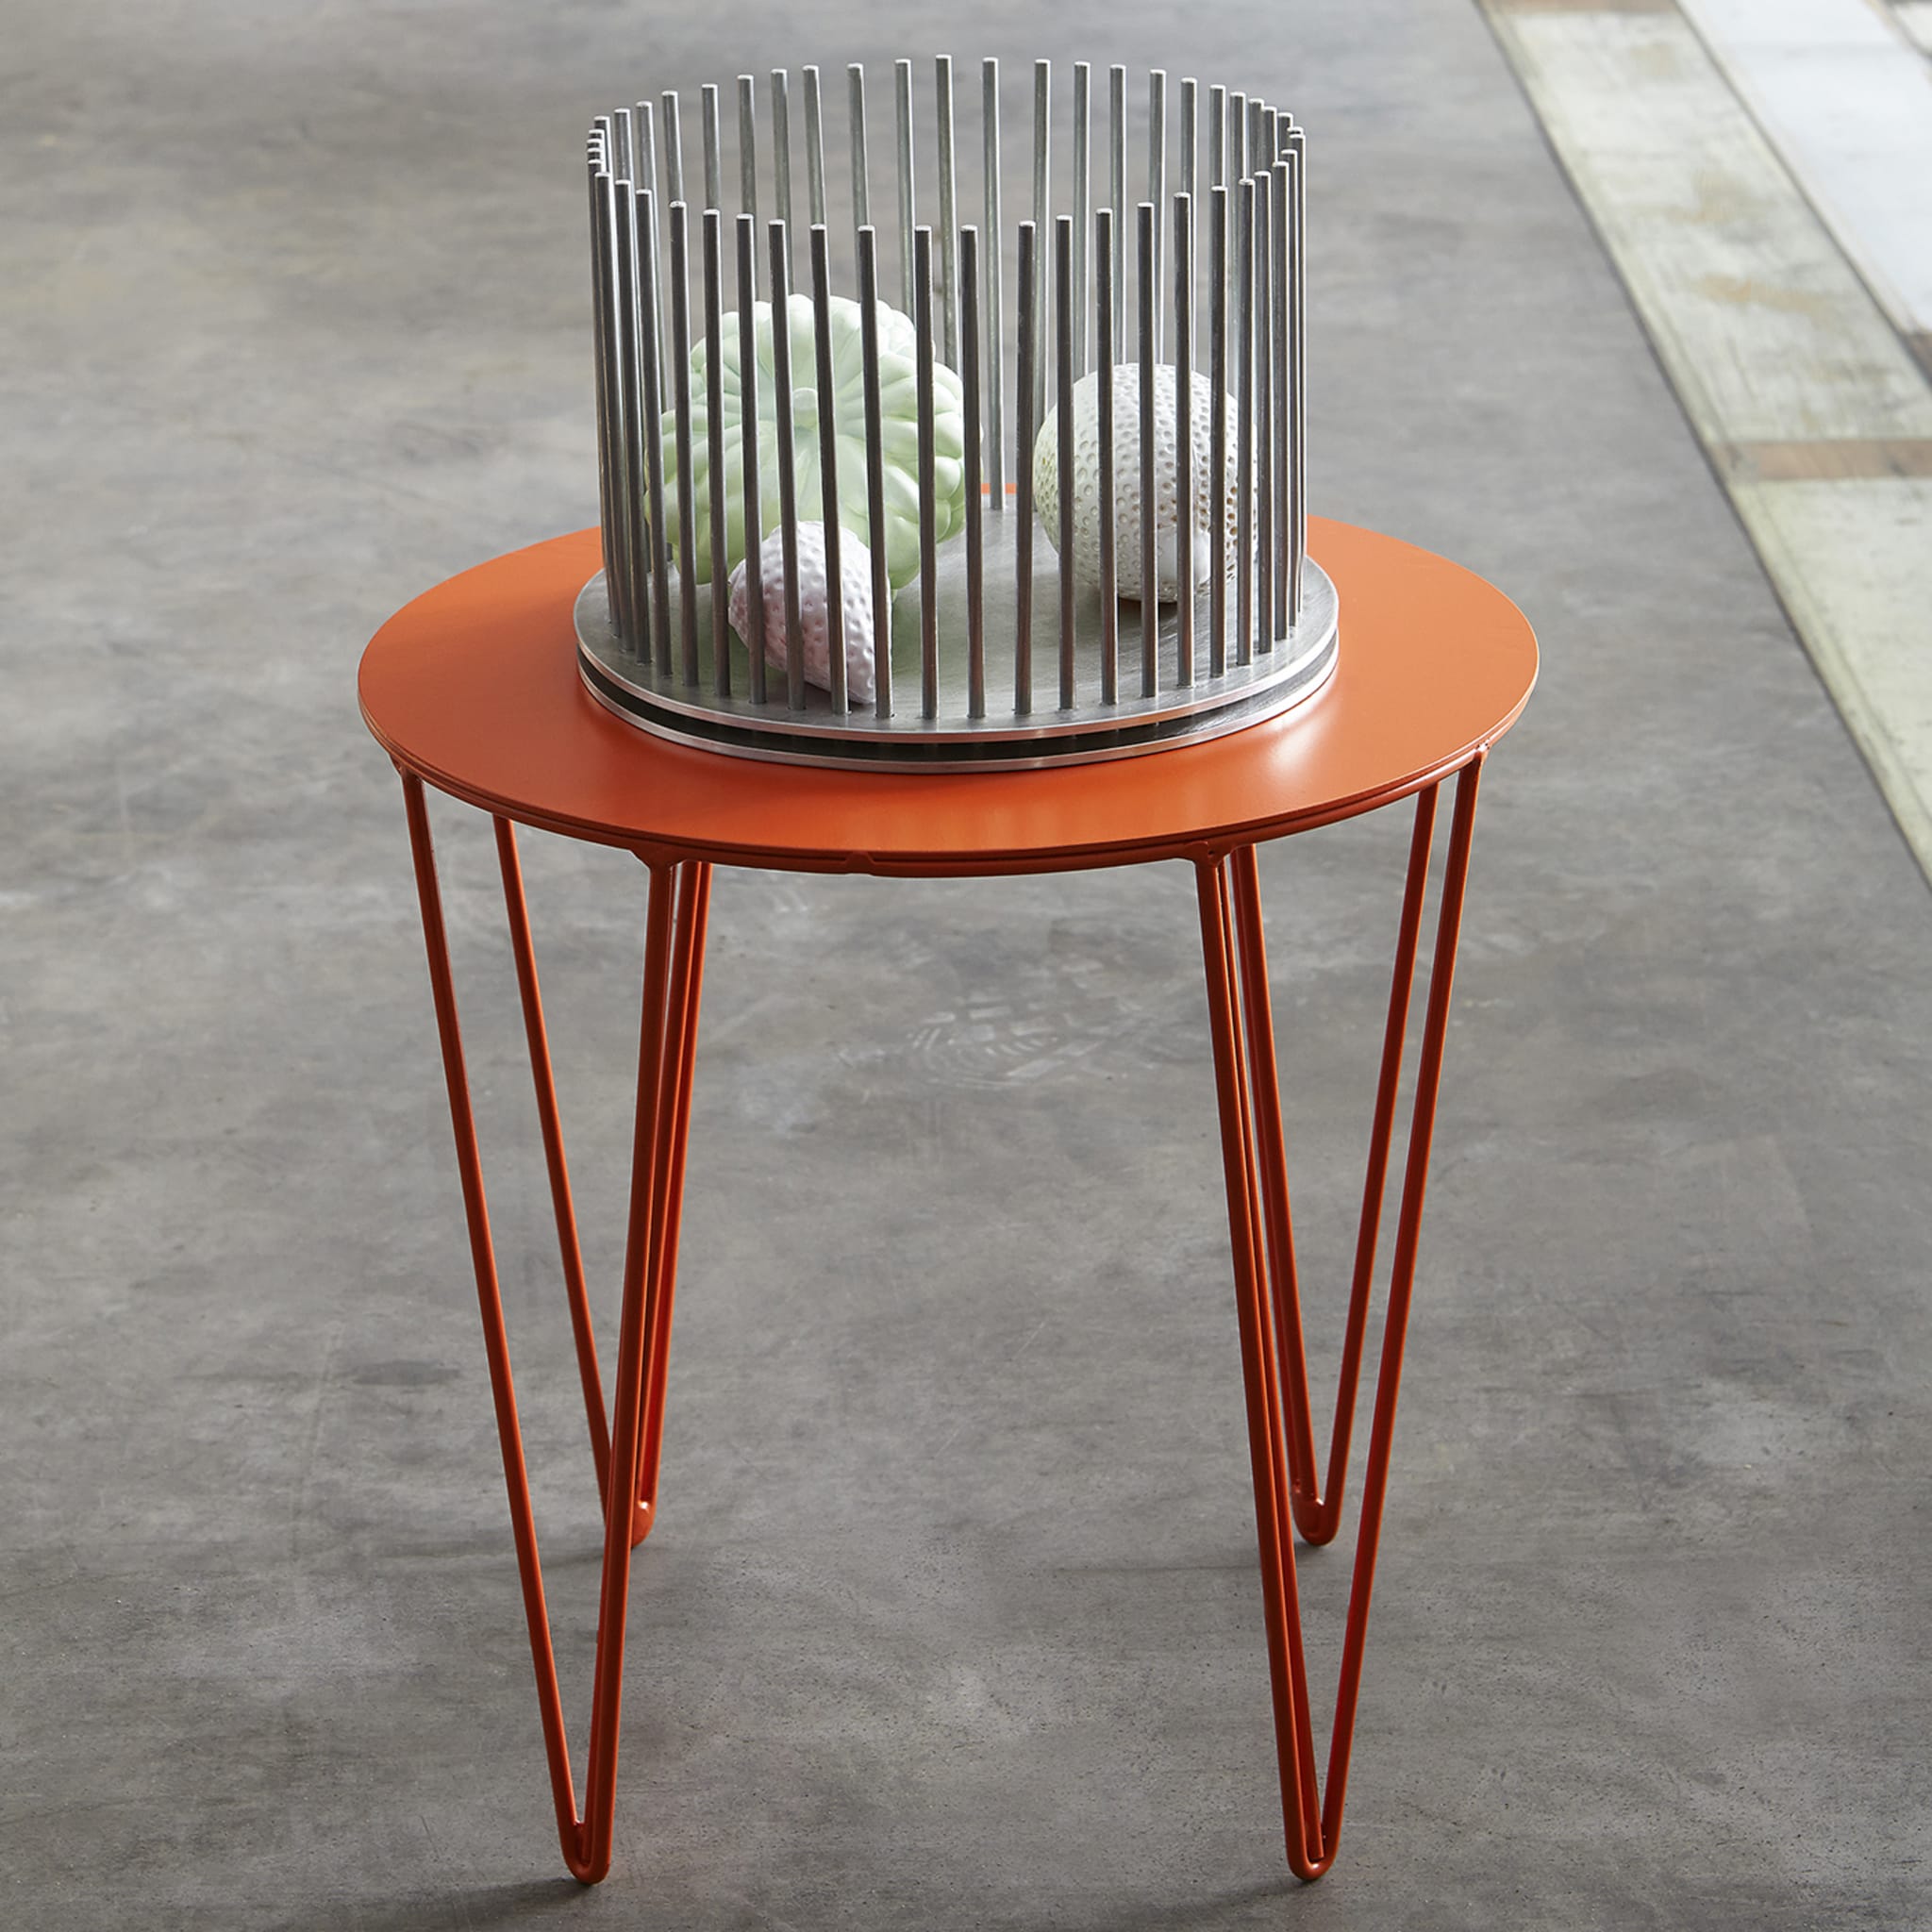 Chele Orange Coffee Table by Antonino Sciortino - Alternative view 2